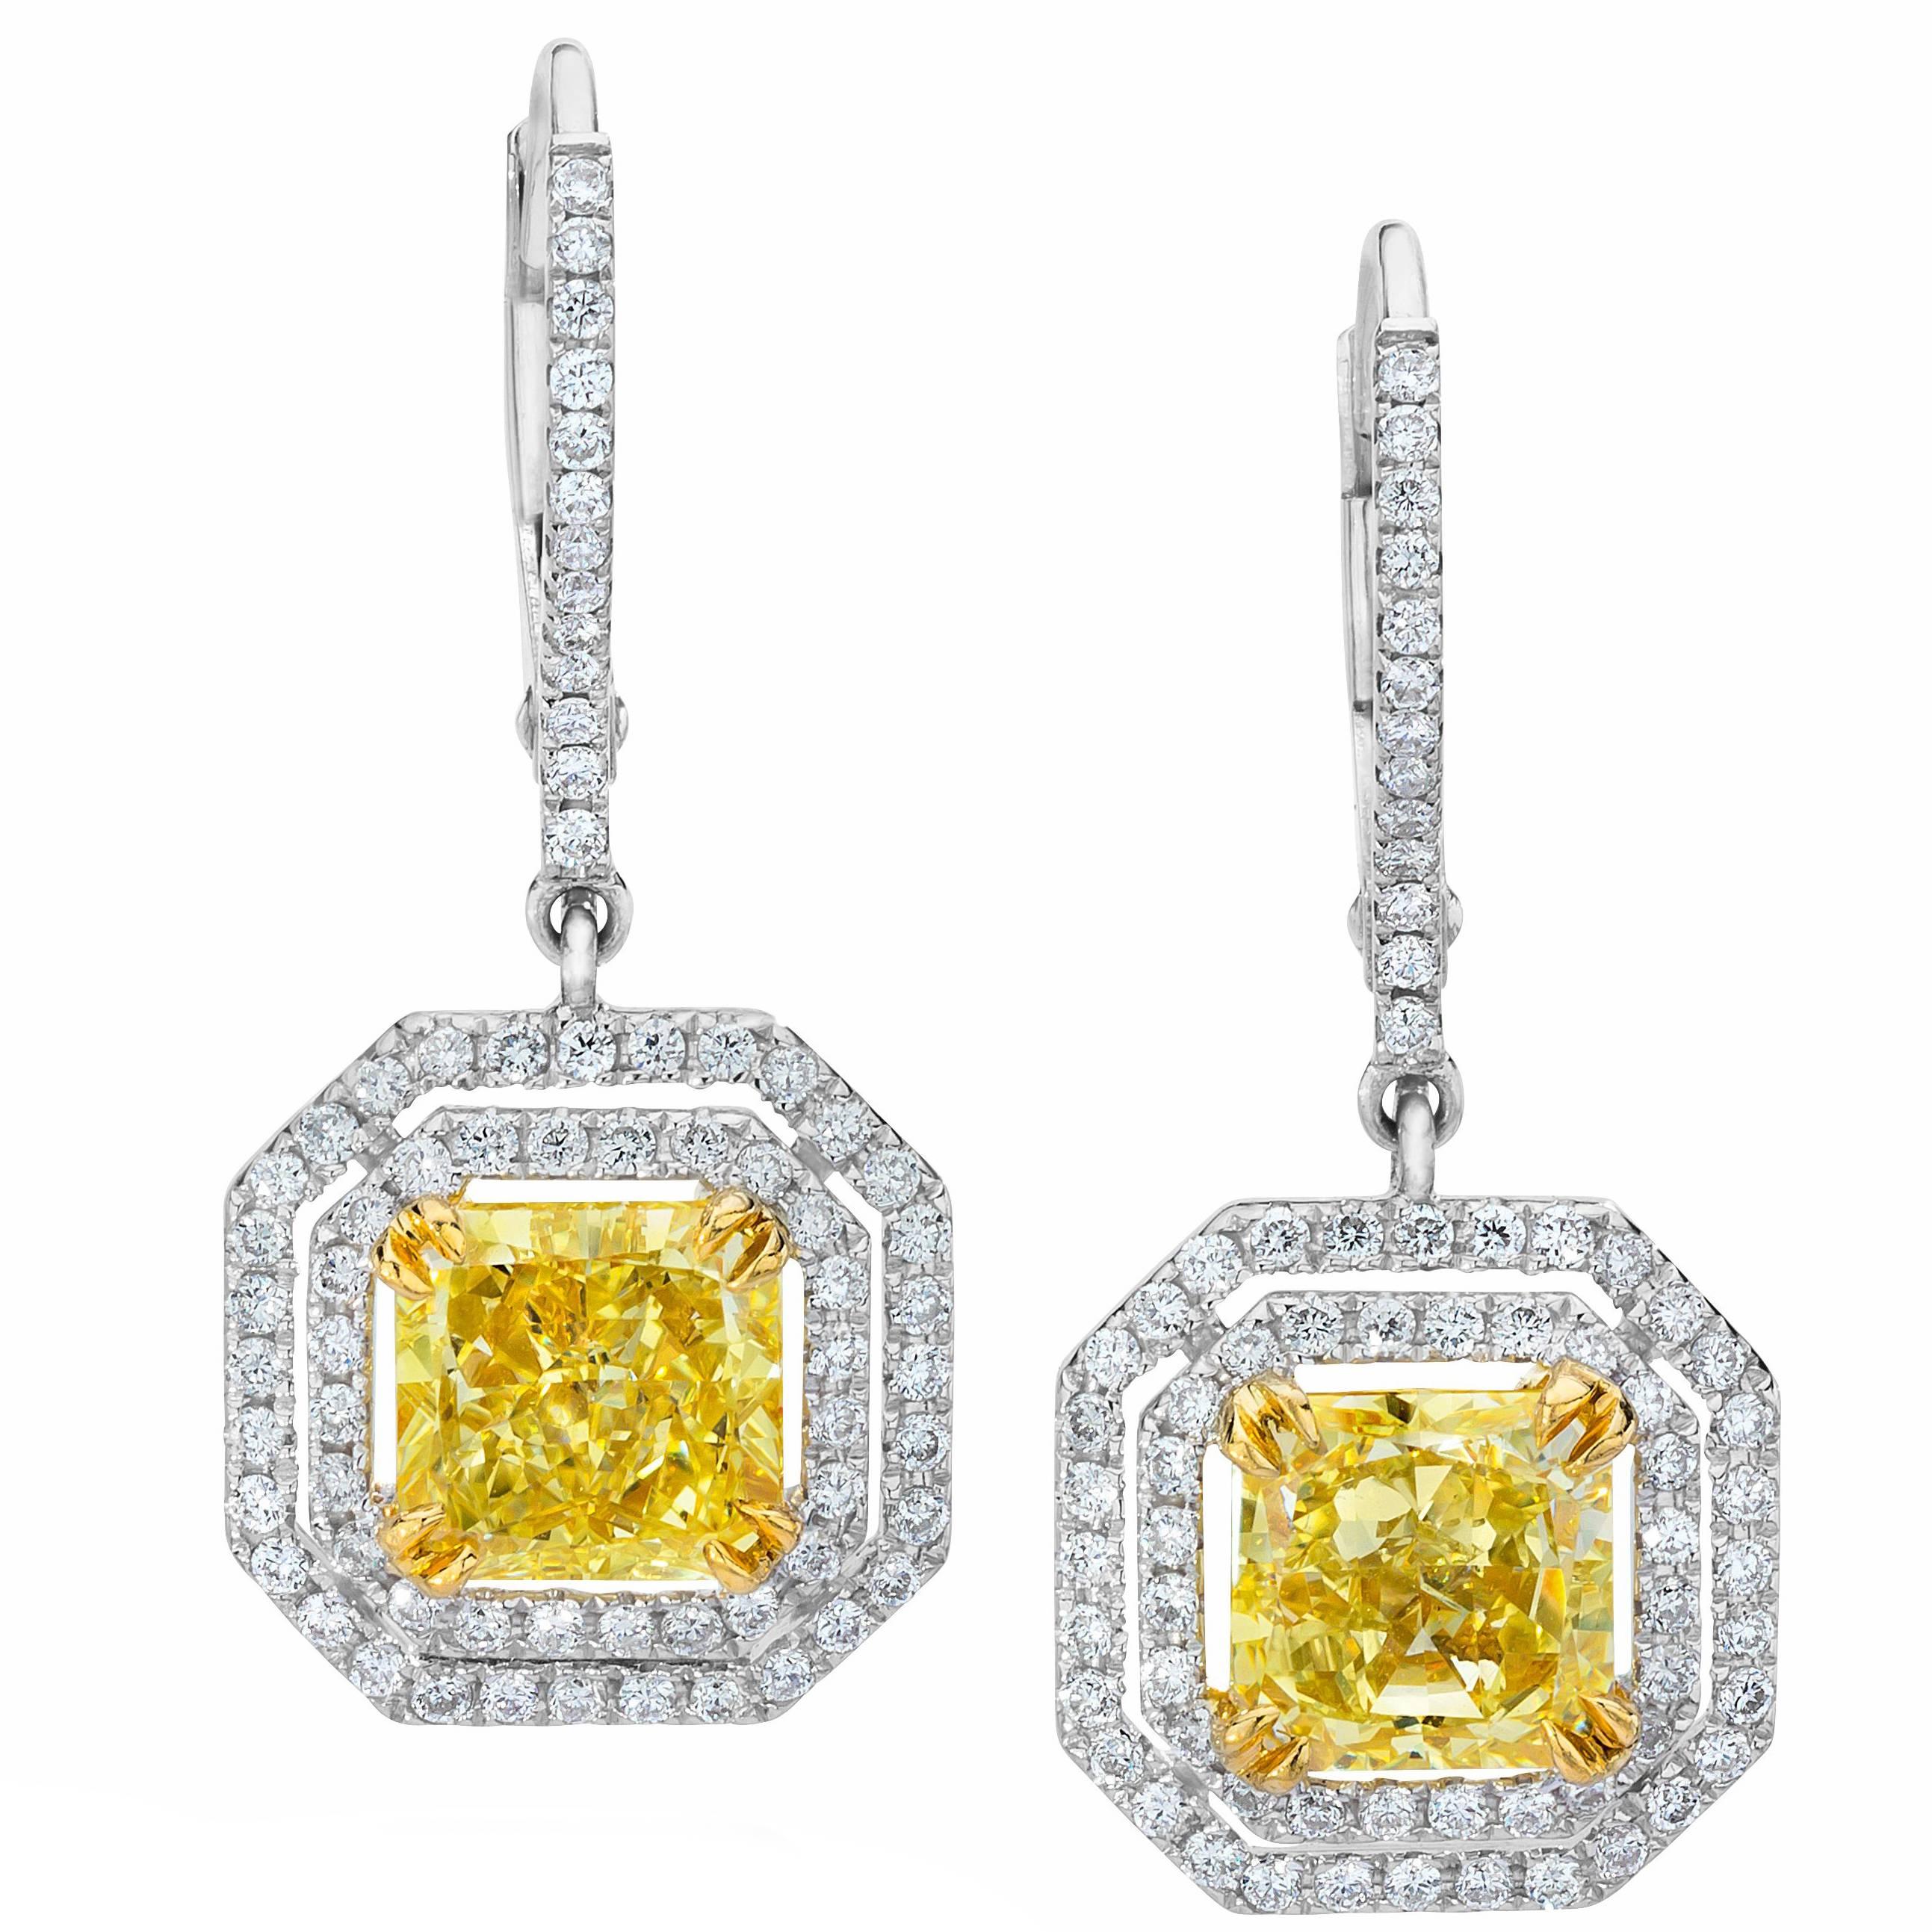 3.00 Carats Total Radiant Cut Yellow Diamond Halo Dangle Earrings